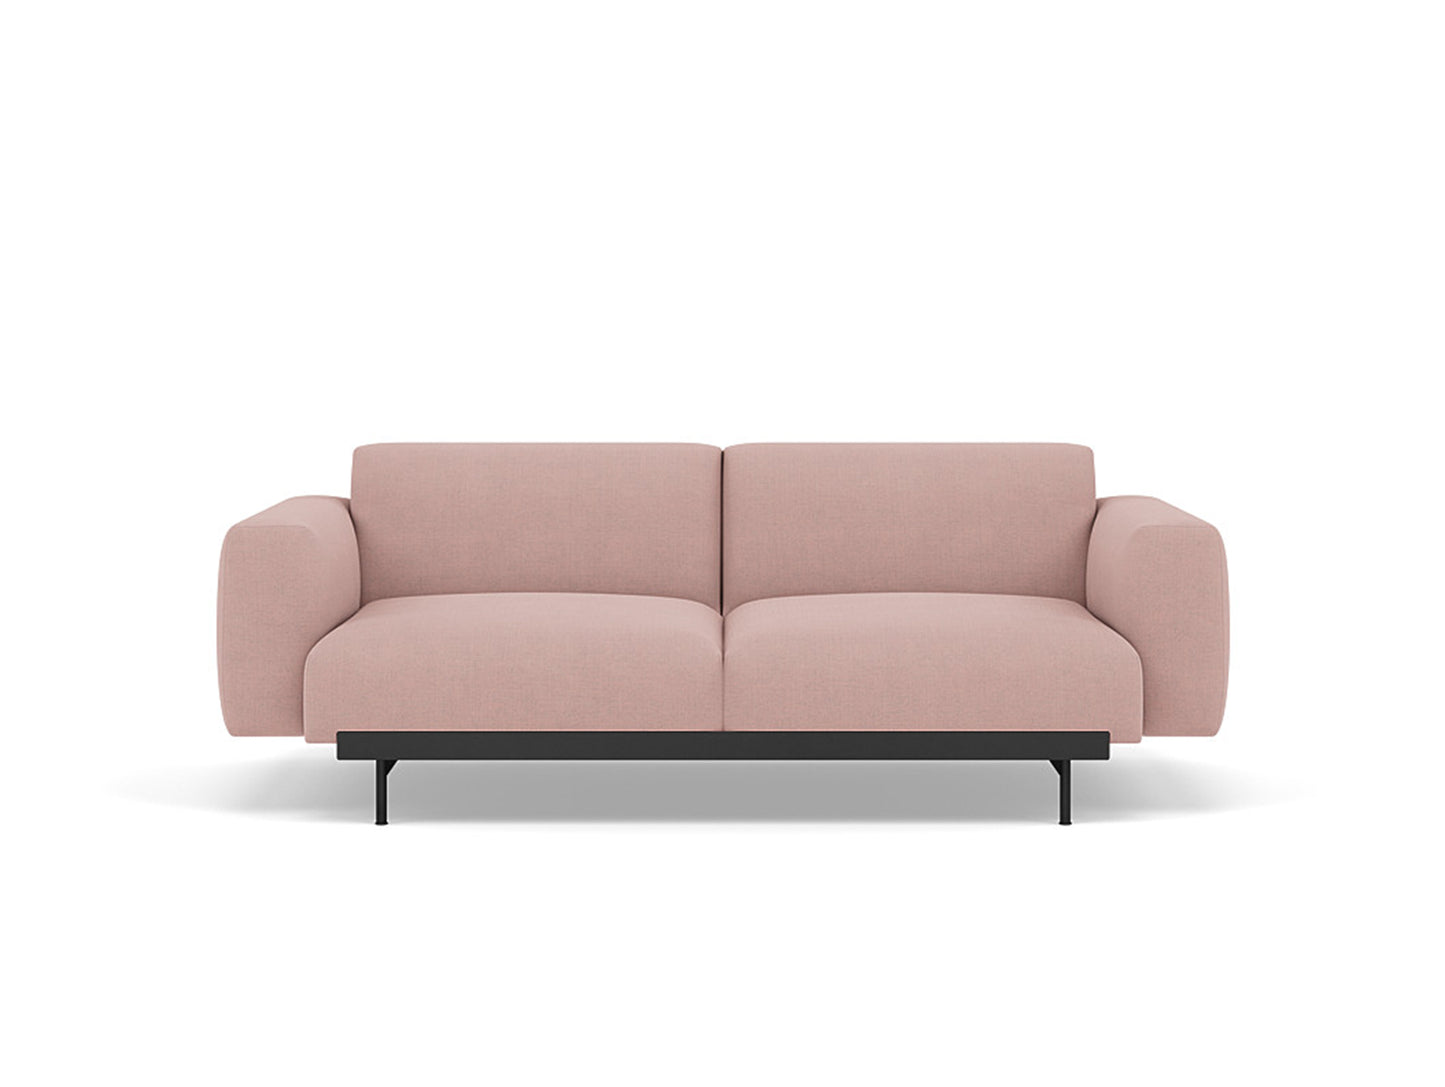 In Situ 2-Seater Modular Sofa by Muuto - Configuration 1 / Fiord 551